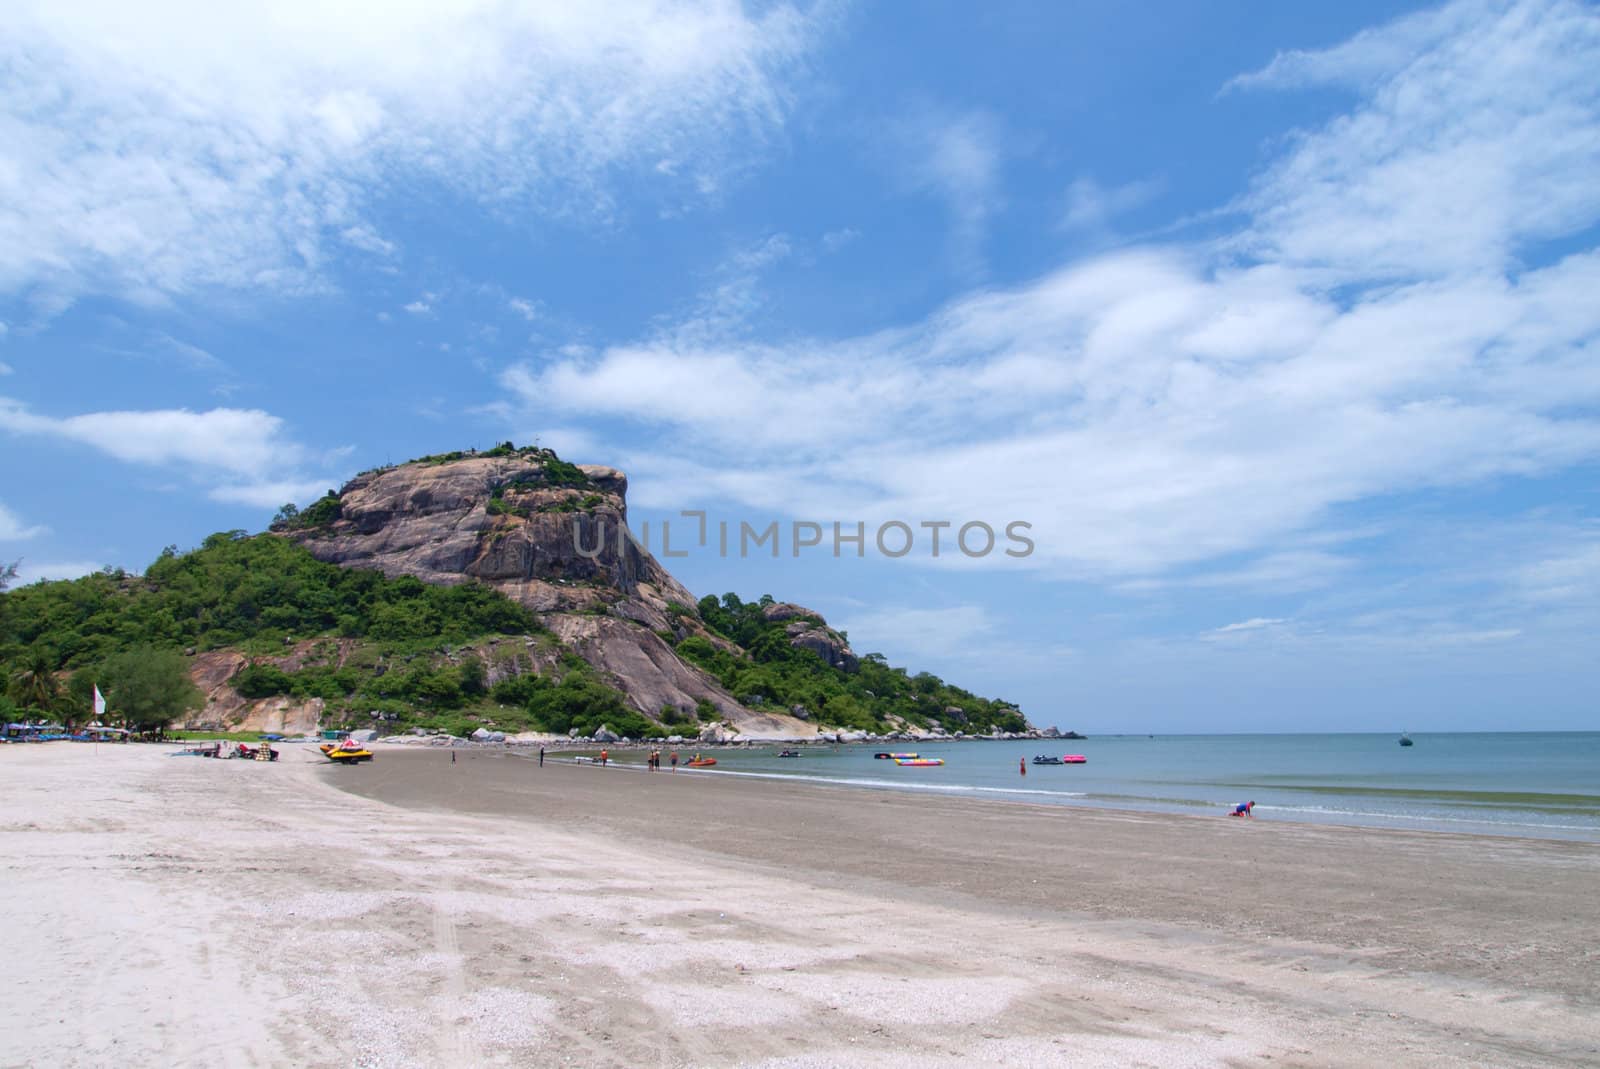 Hua Hin beach in Thailand by jakgree